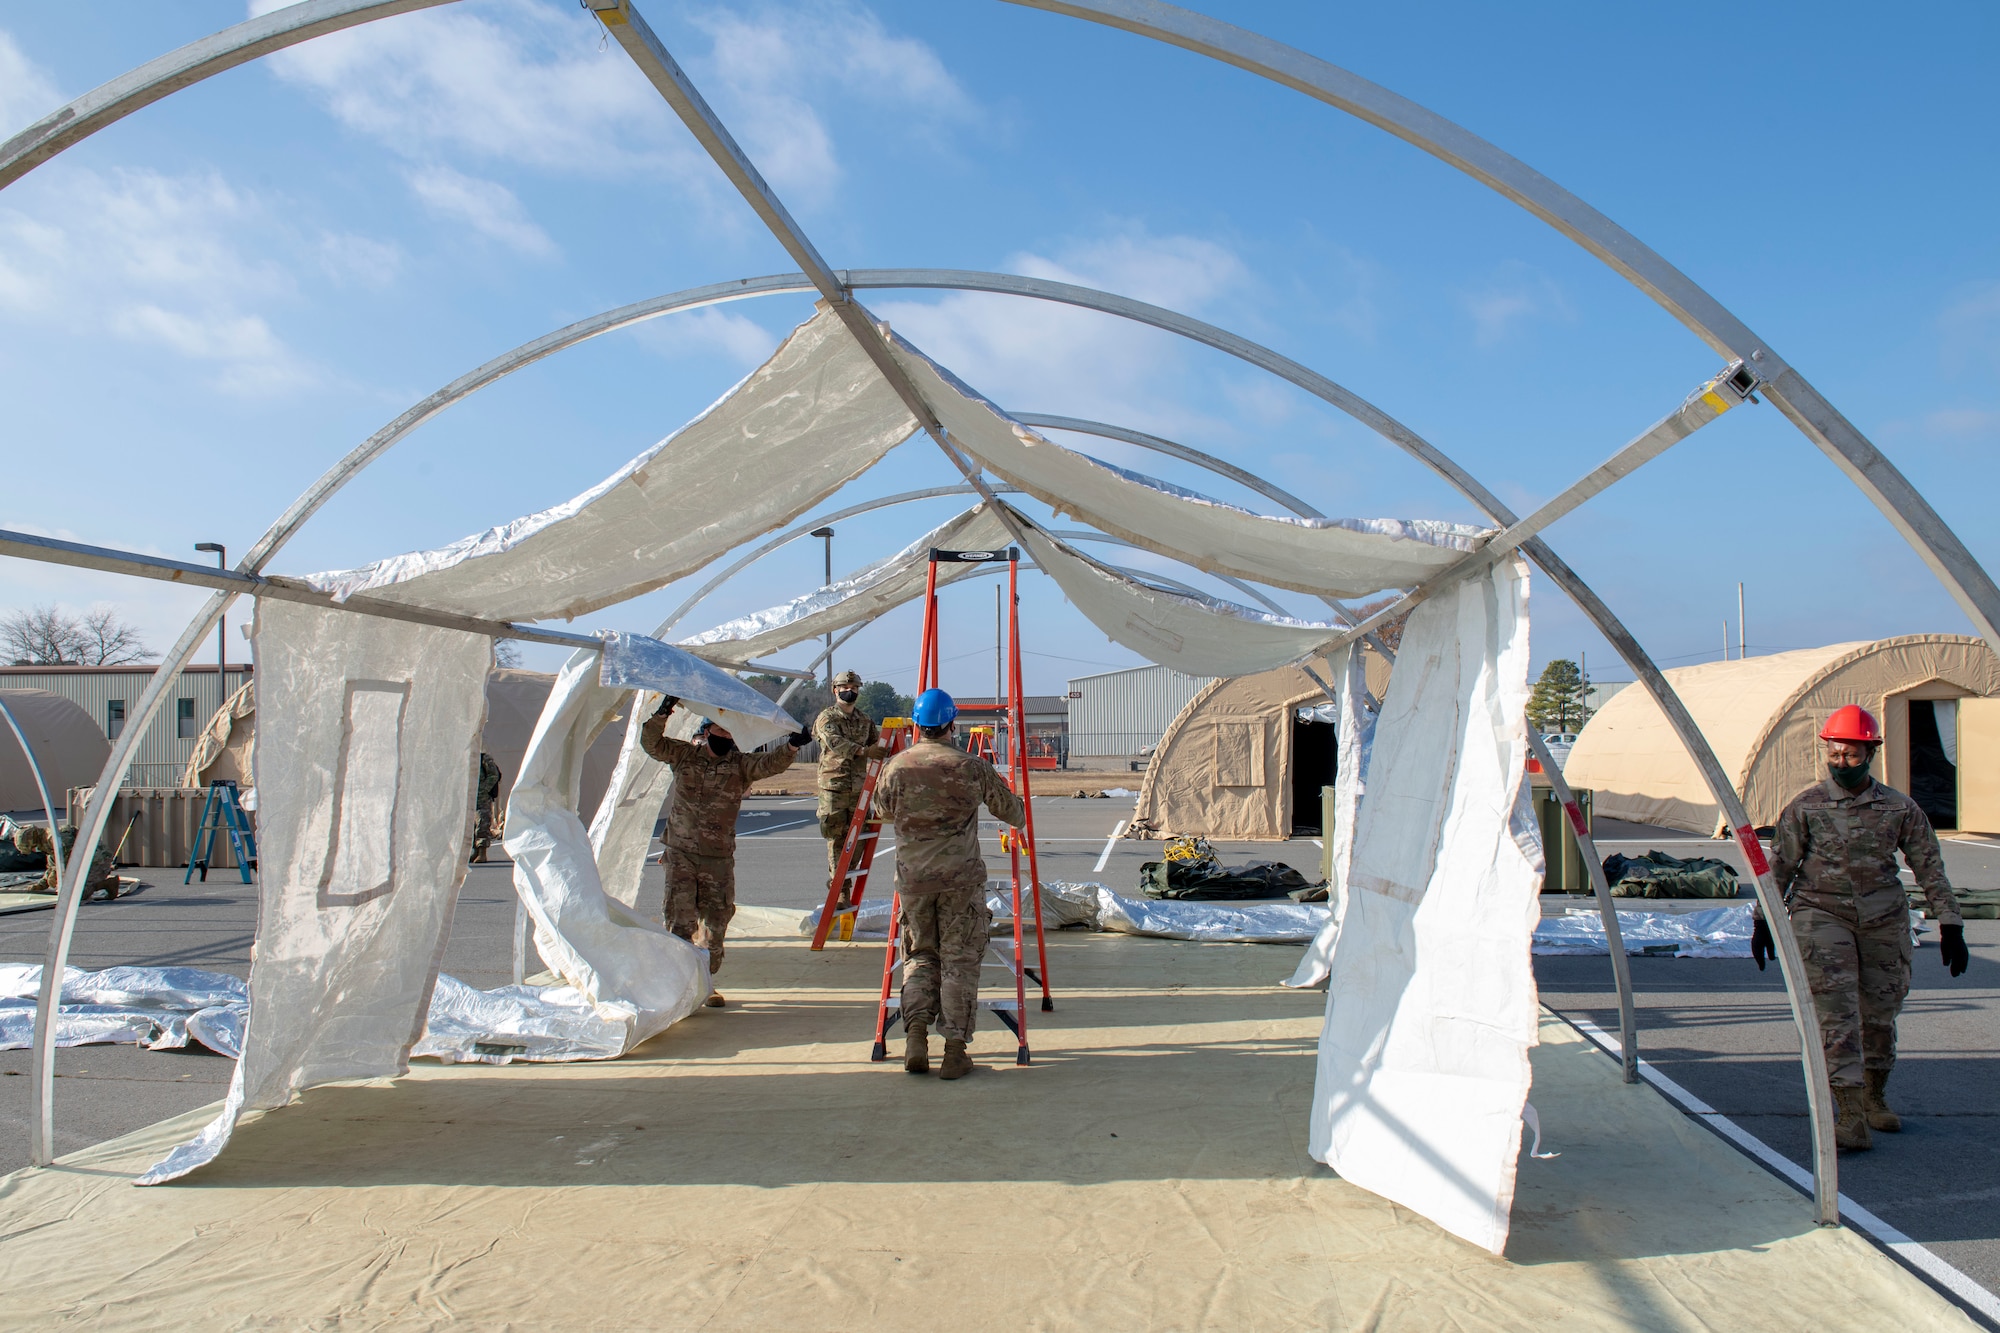 Members building a tent